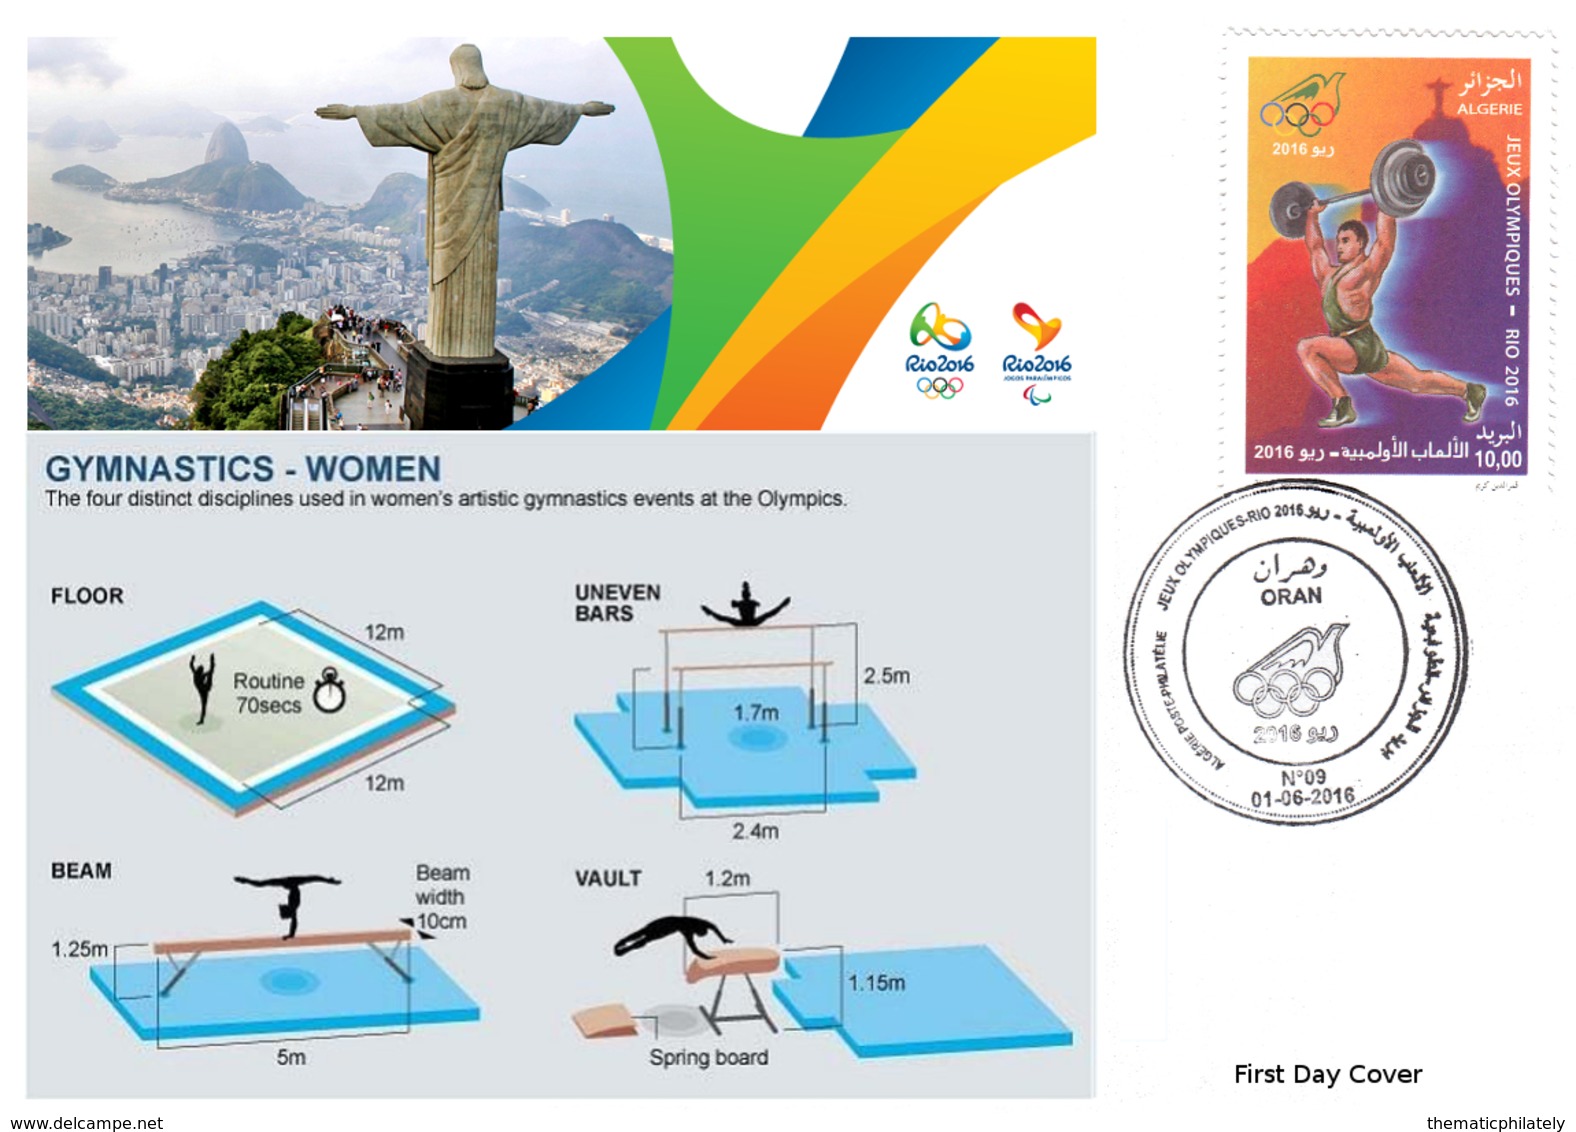 DZ Algeria 1747 Olympics Games Rio Brazil 2016 Jeux Olympiques Brésil Gymnastics Gymnastik Gymnastique - Gymnastics